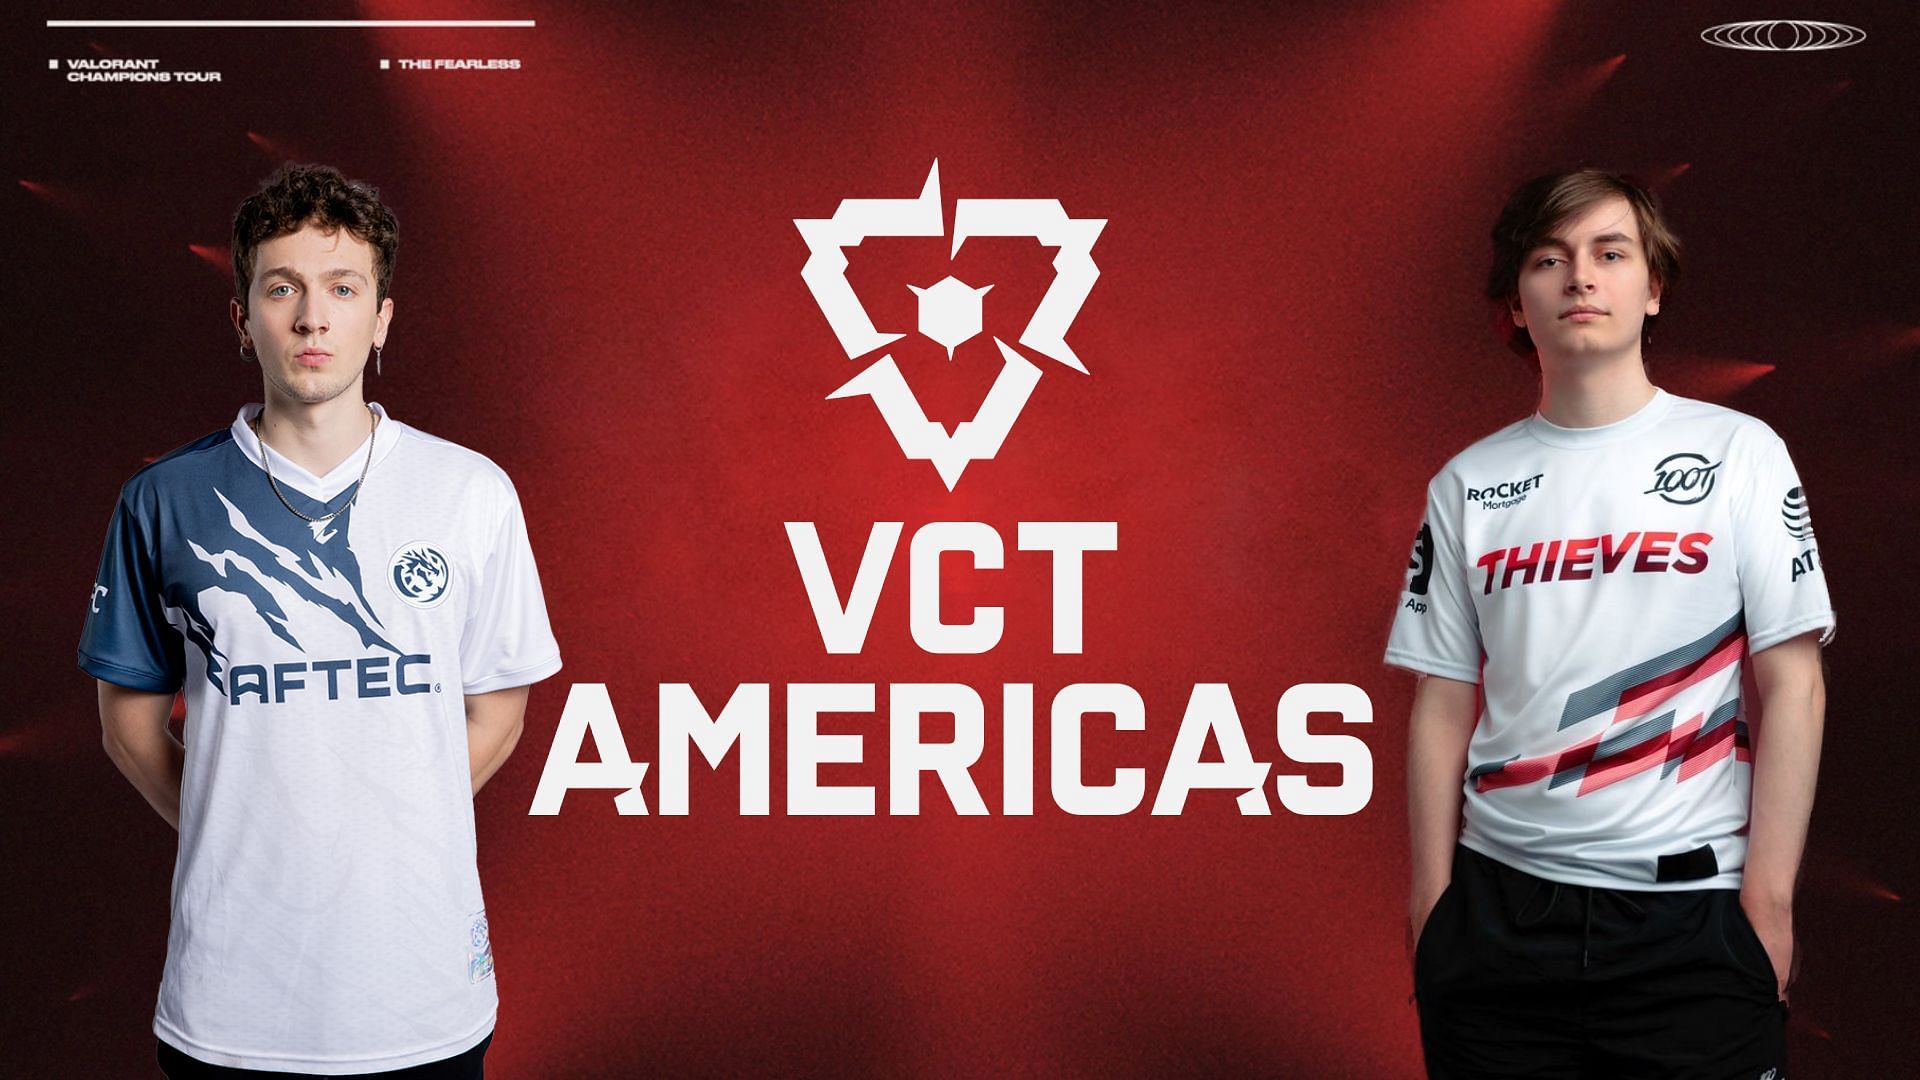 Leviatan vs 100 Thieves at VCT Americas League (Image via Sportskeeda)